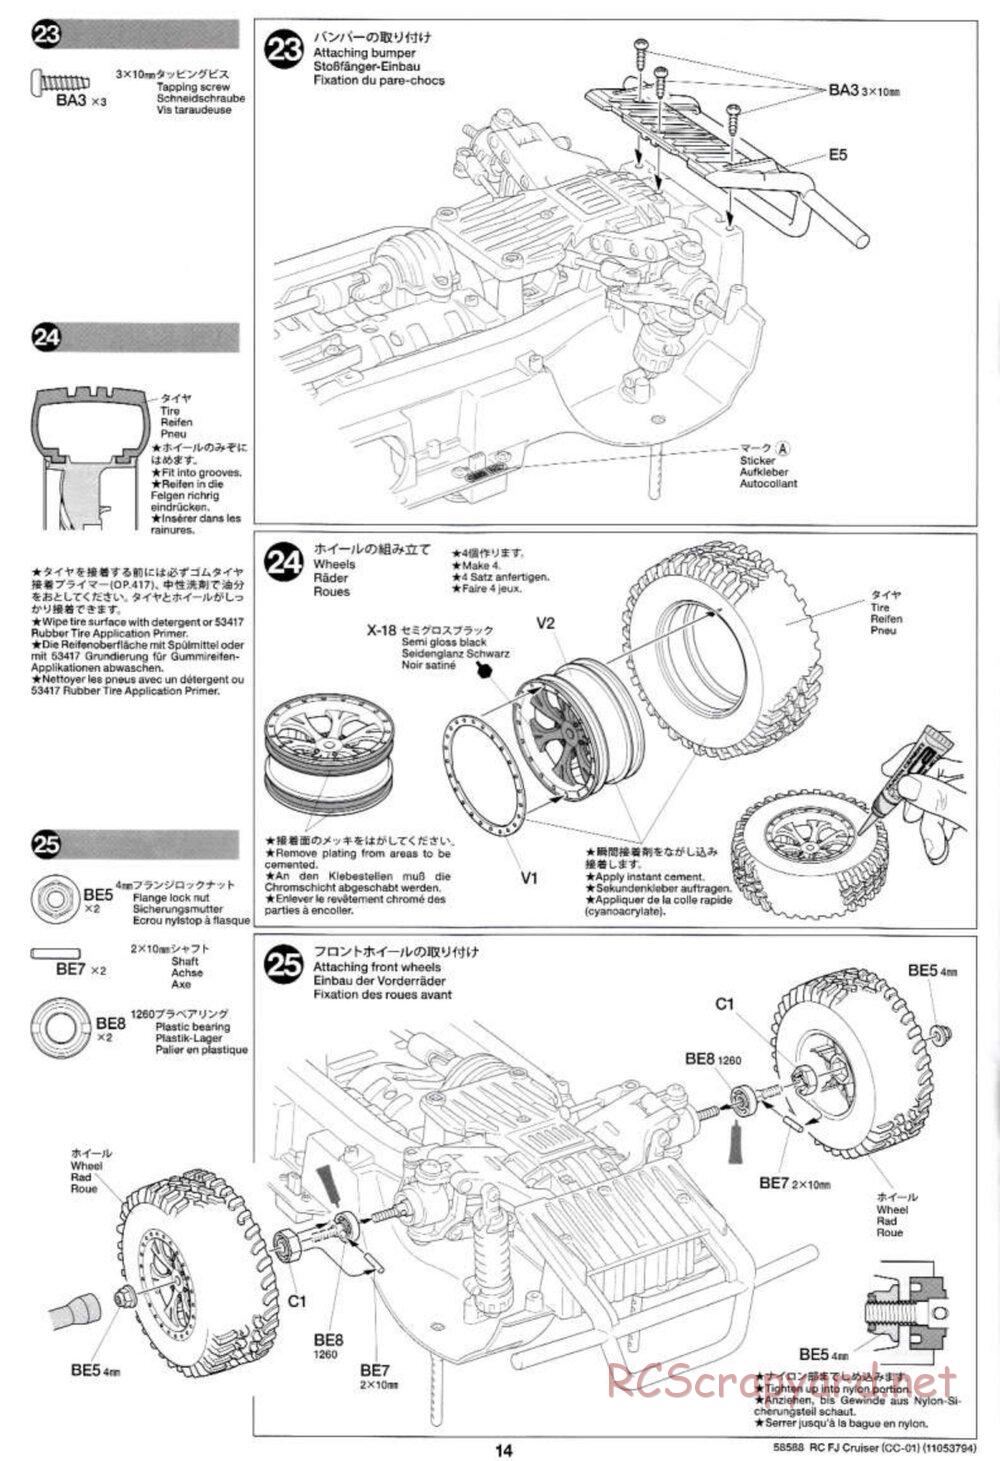 Tamiya - Toyota FJ Cruiser - CC-01 Chassis - Manual - Page 14